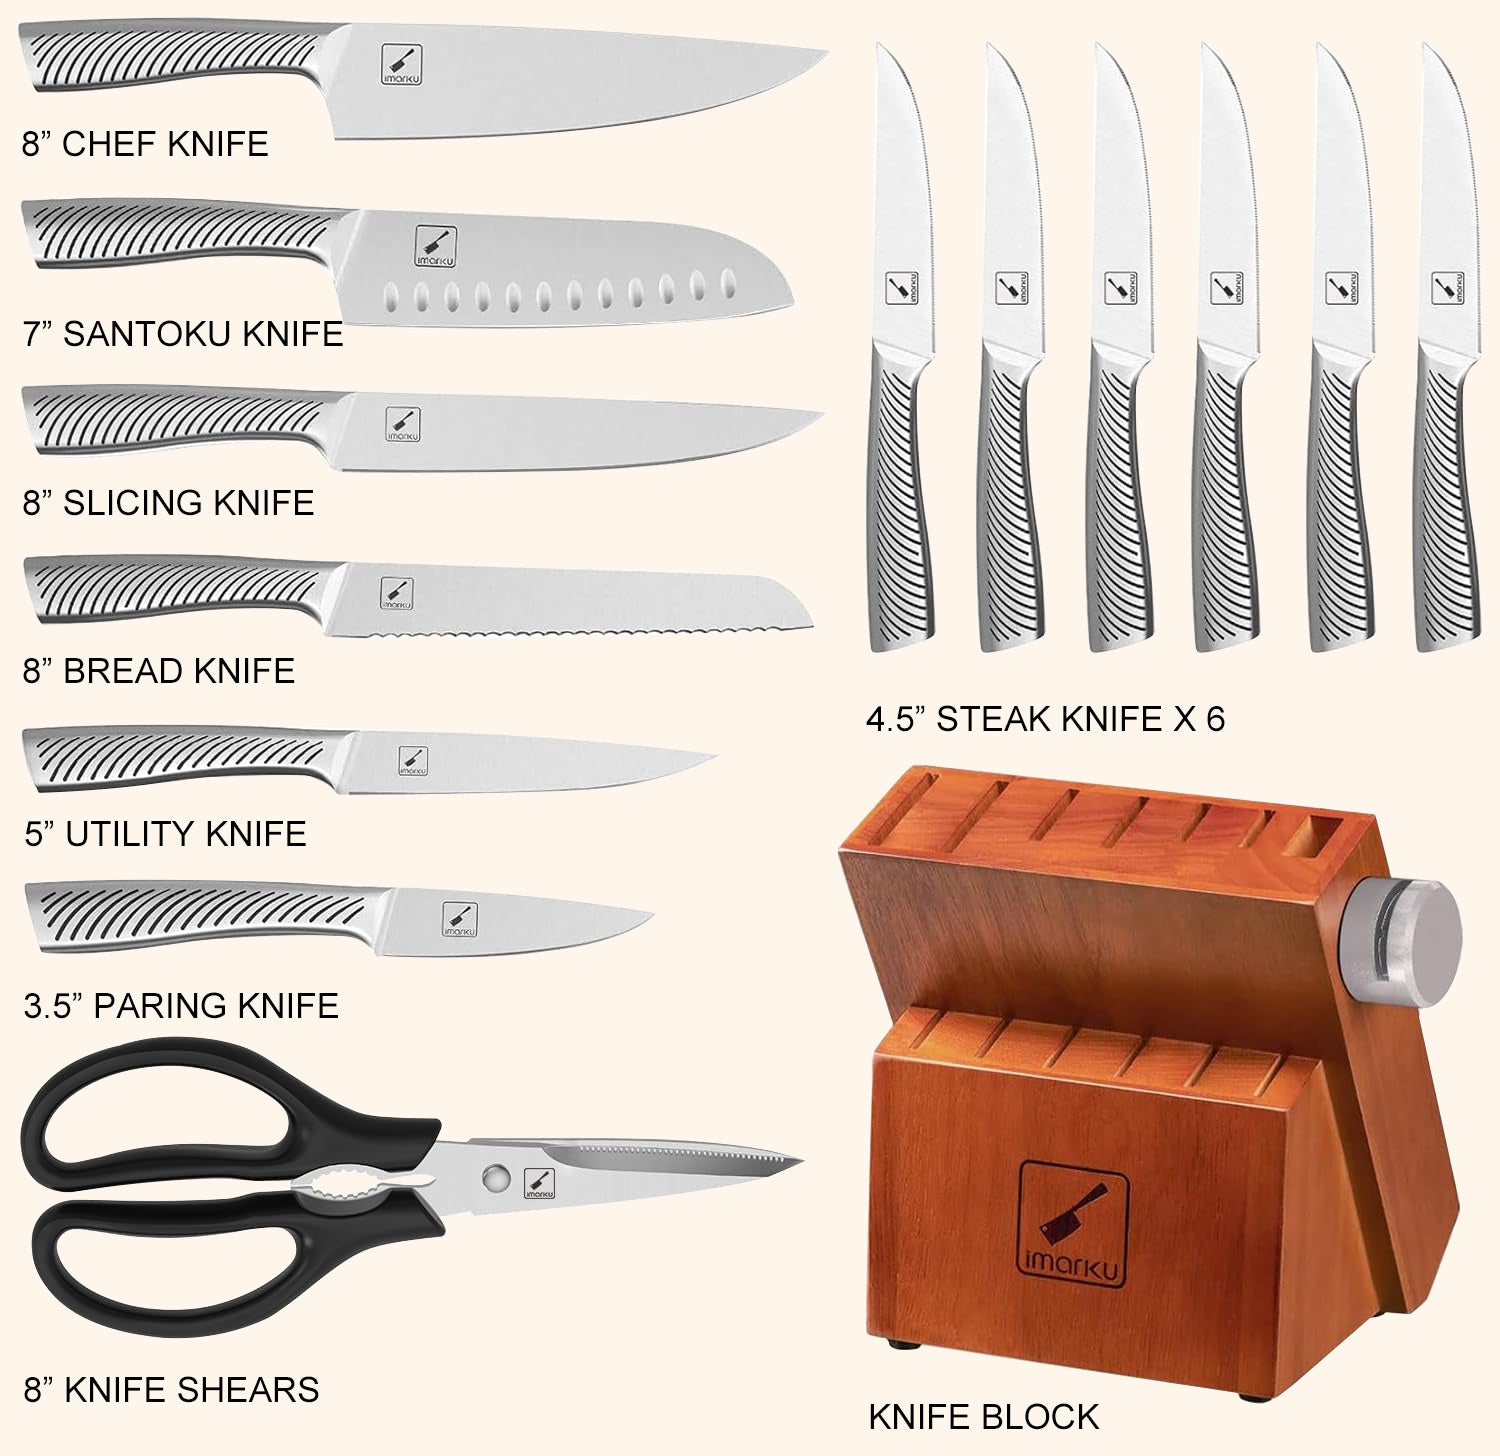 14-Piece Kitchen Knife Set